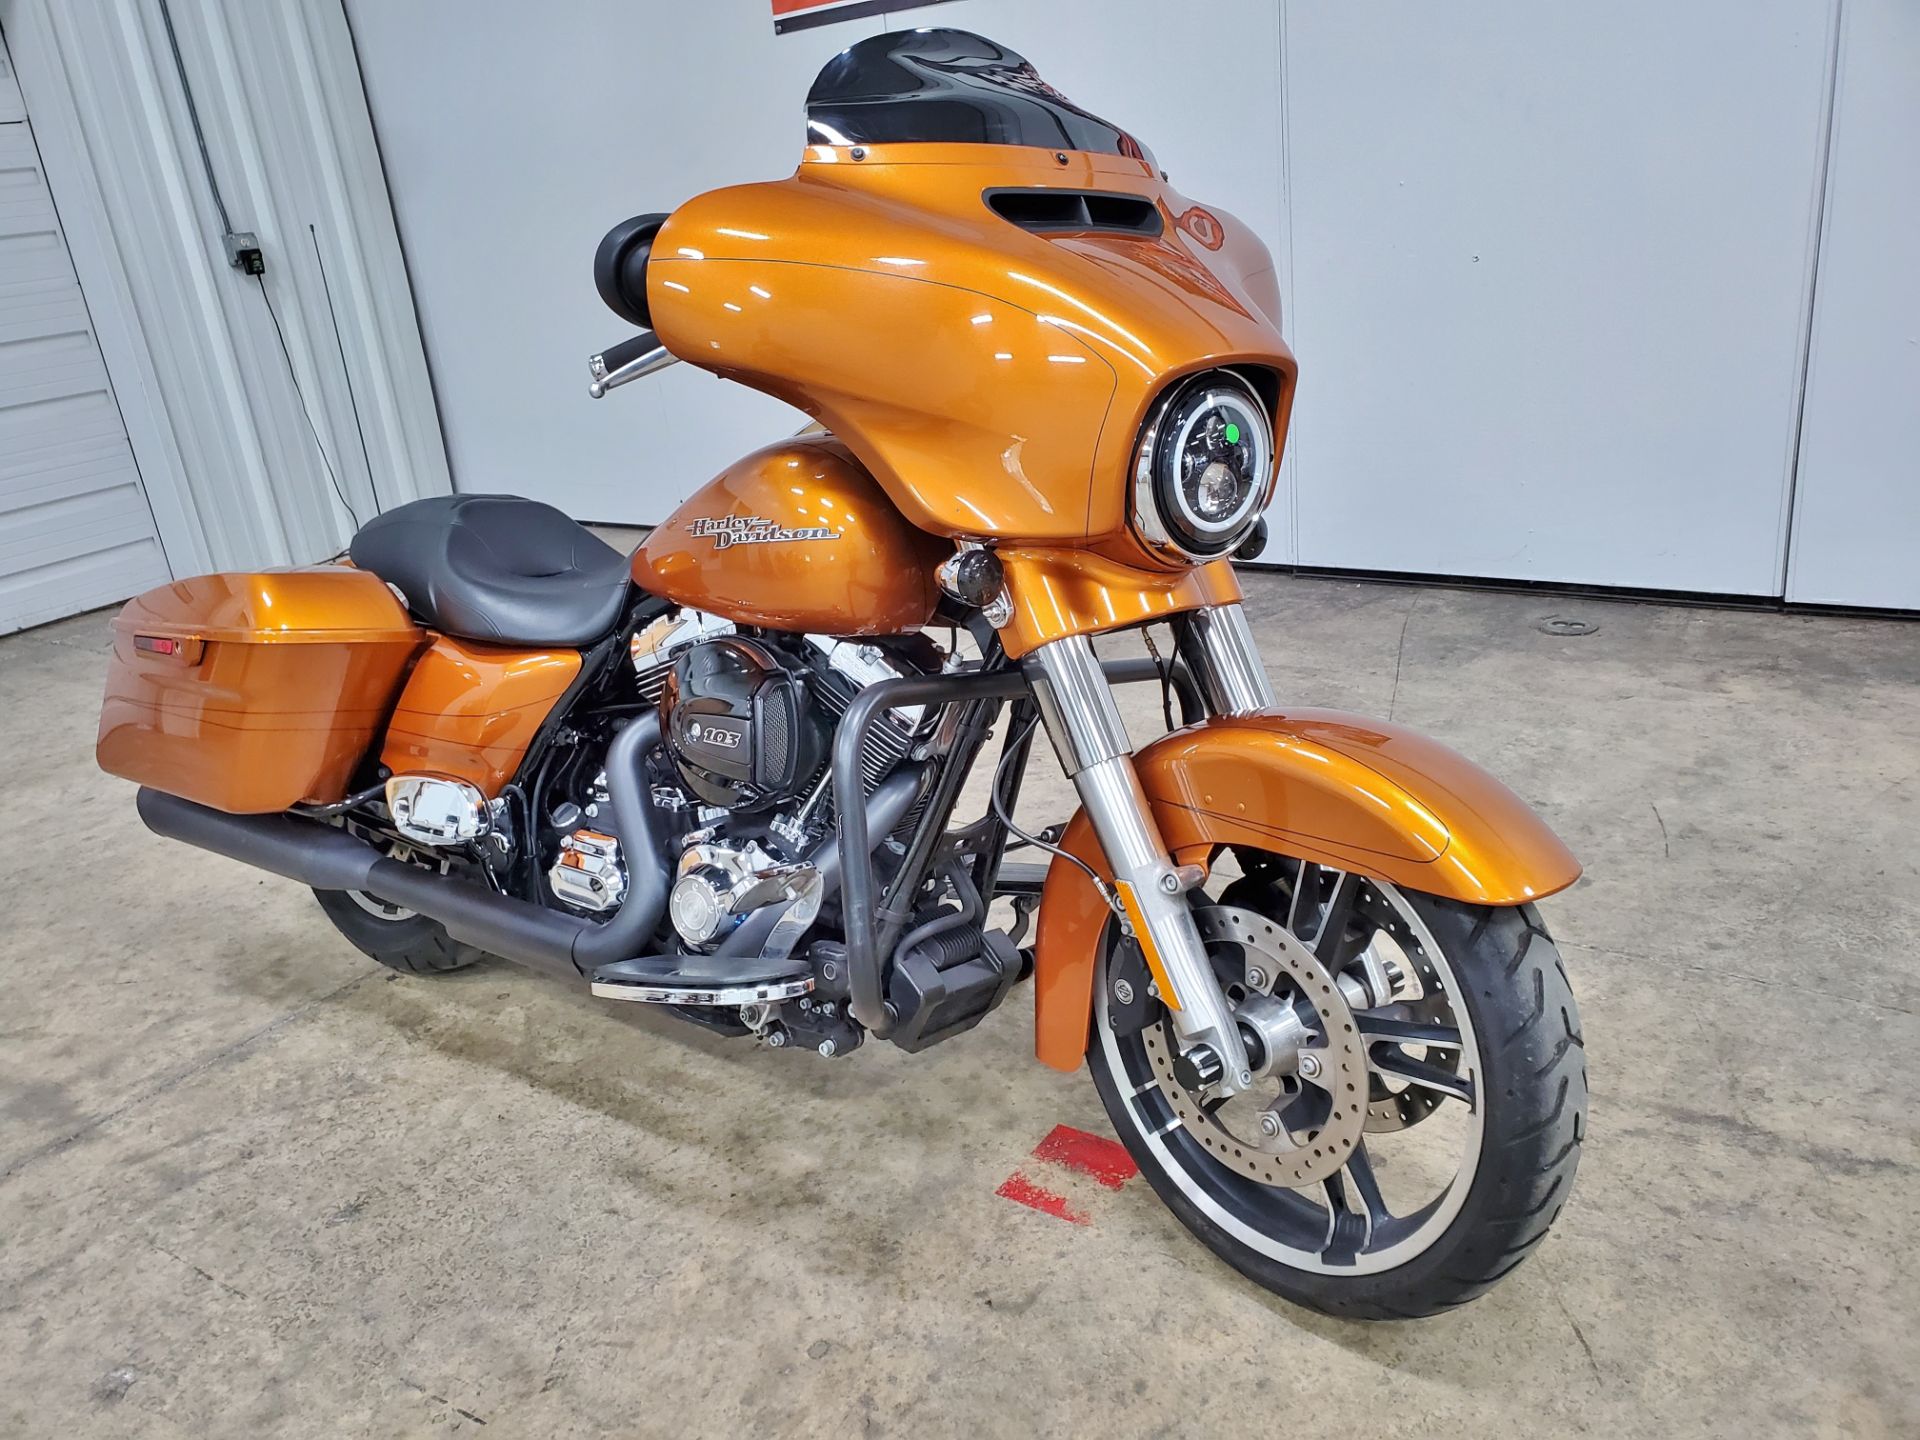 2014 Harley-Davidson Street Glide® Special in Sandusky, Ohio - Photo 3